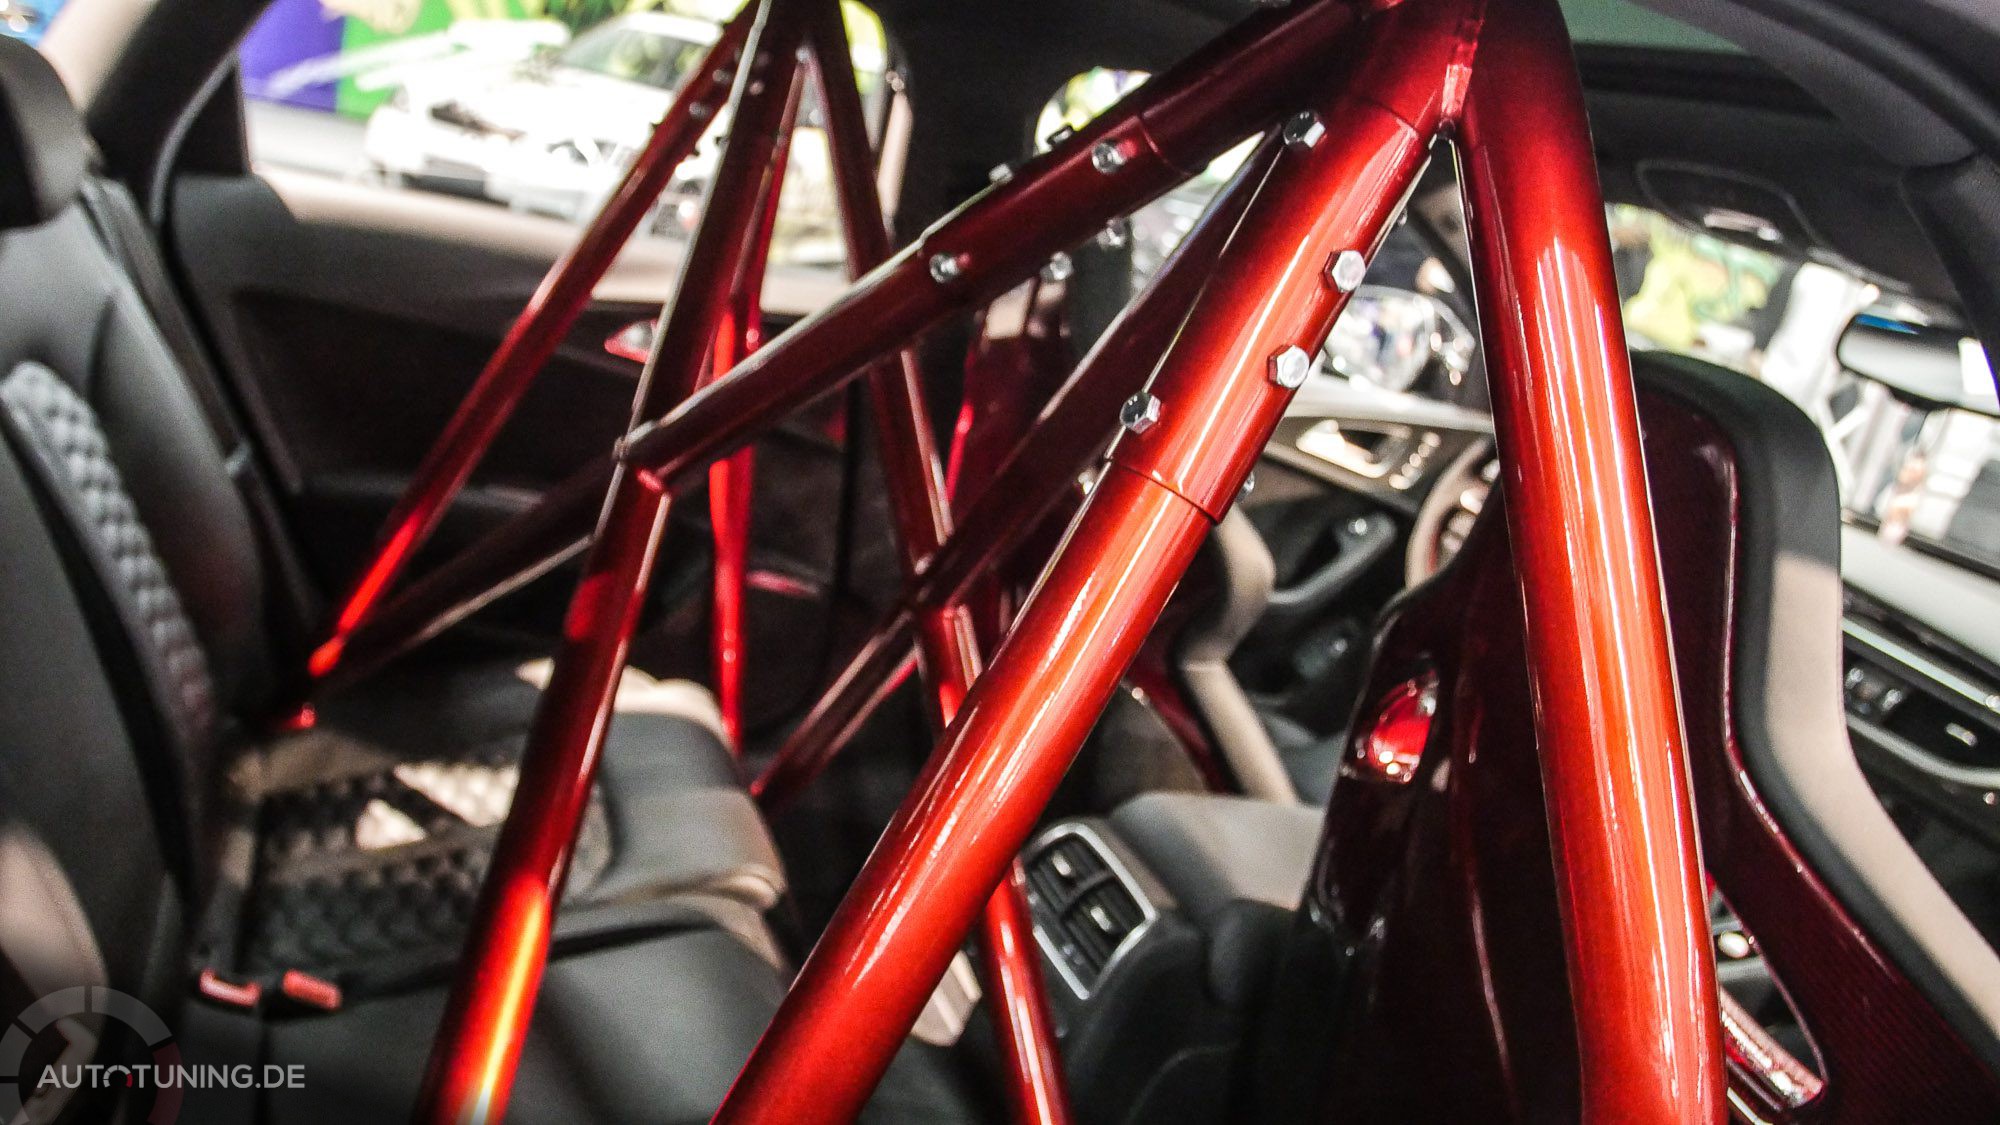 Rotglänzende Überrollbügel im Fahrzeuginnenraum